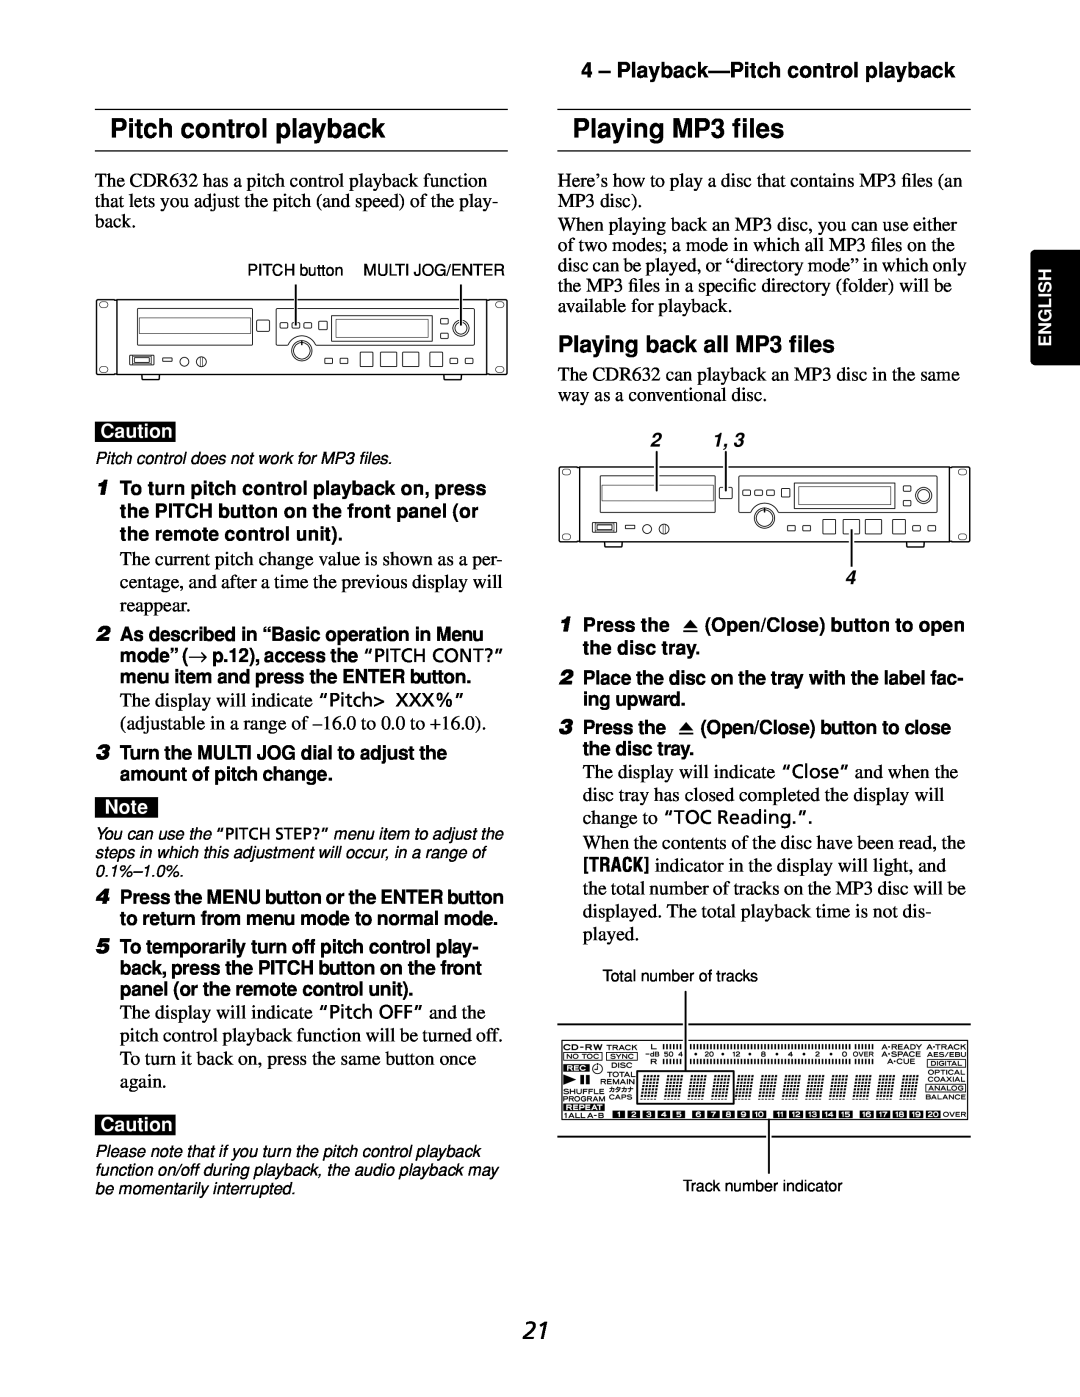 Marantz CDR632 manual Pitch control playback, Playing MP3 ﬁles, Playing back all MP3 ﬁles, Playback-Pitchcontrol playback 